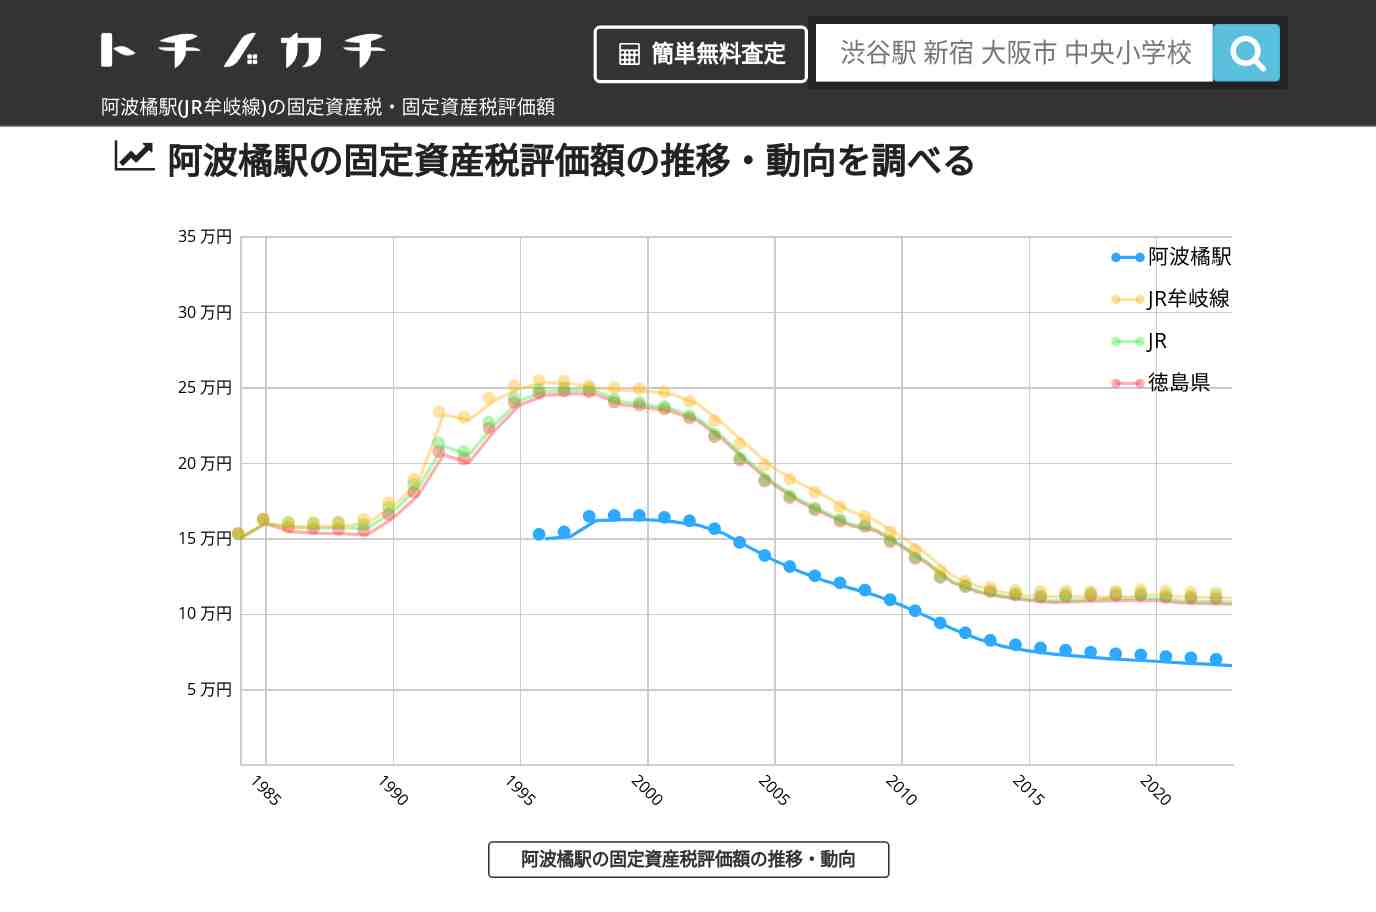 阿波橘駅(JR牟岐線)の固定資産税・固定資産税評価額 | トチノカチ